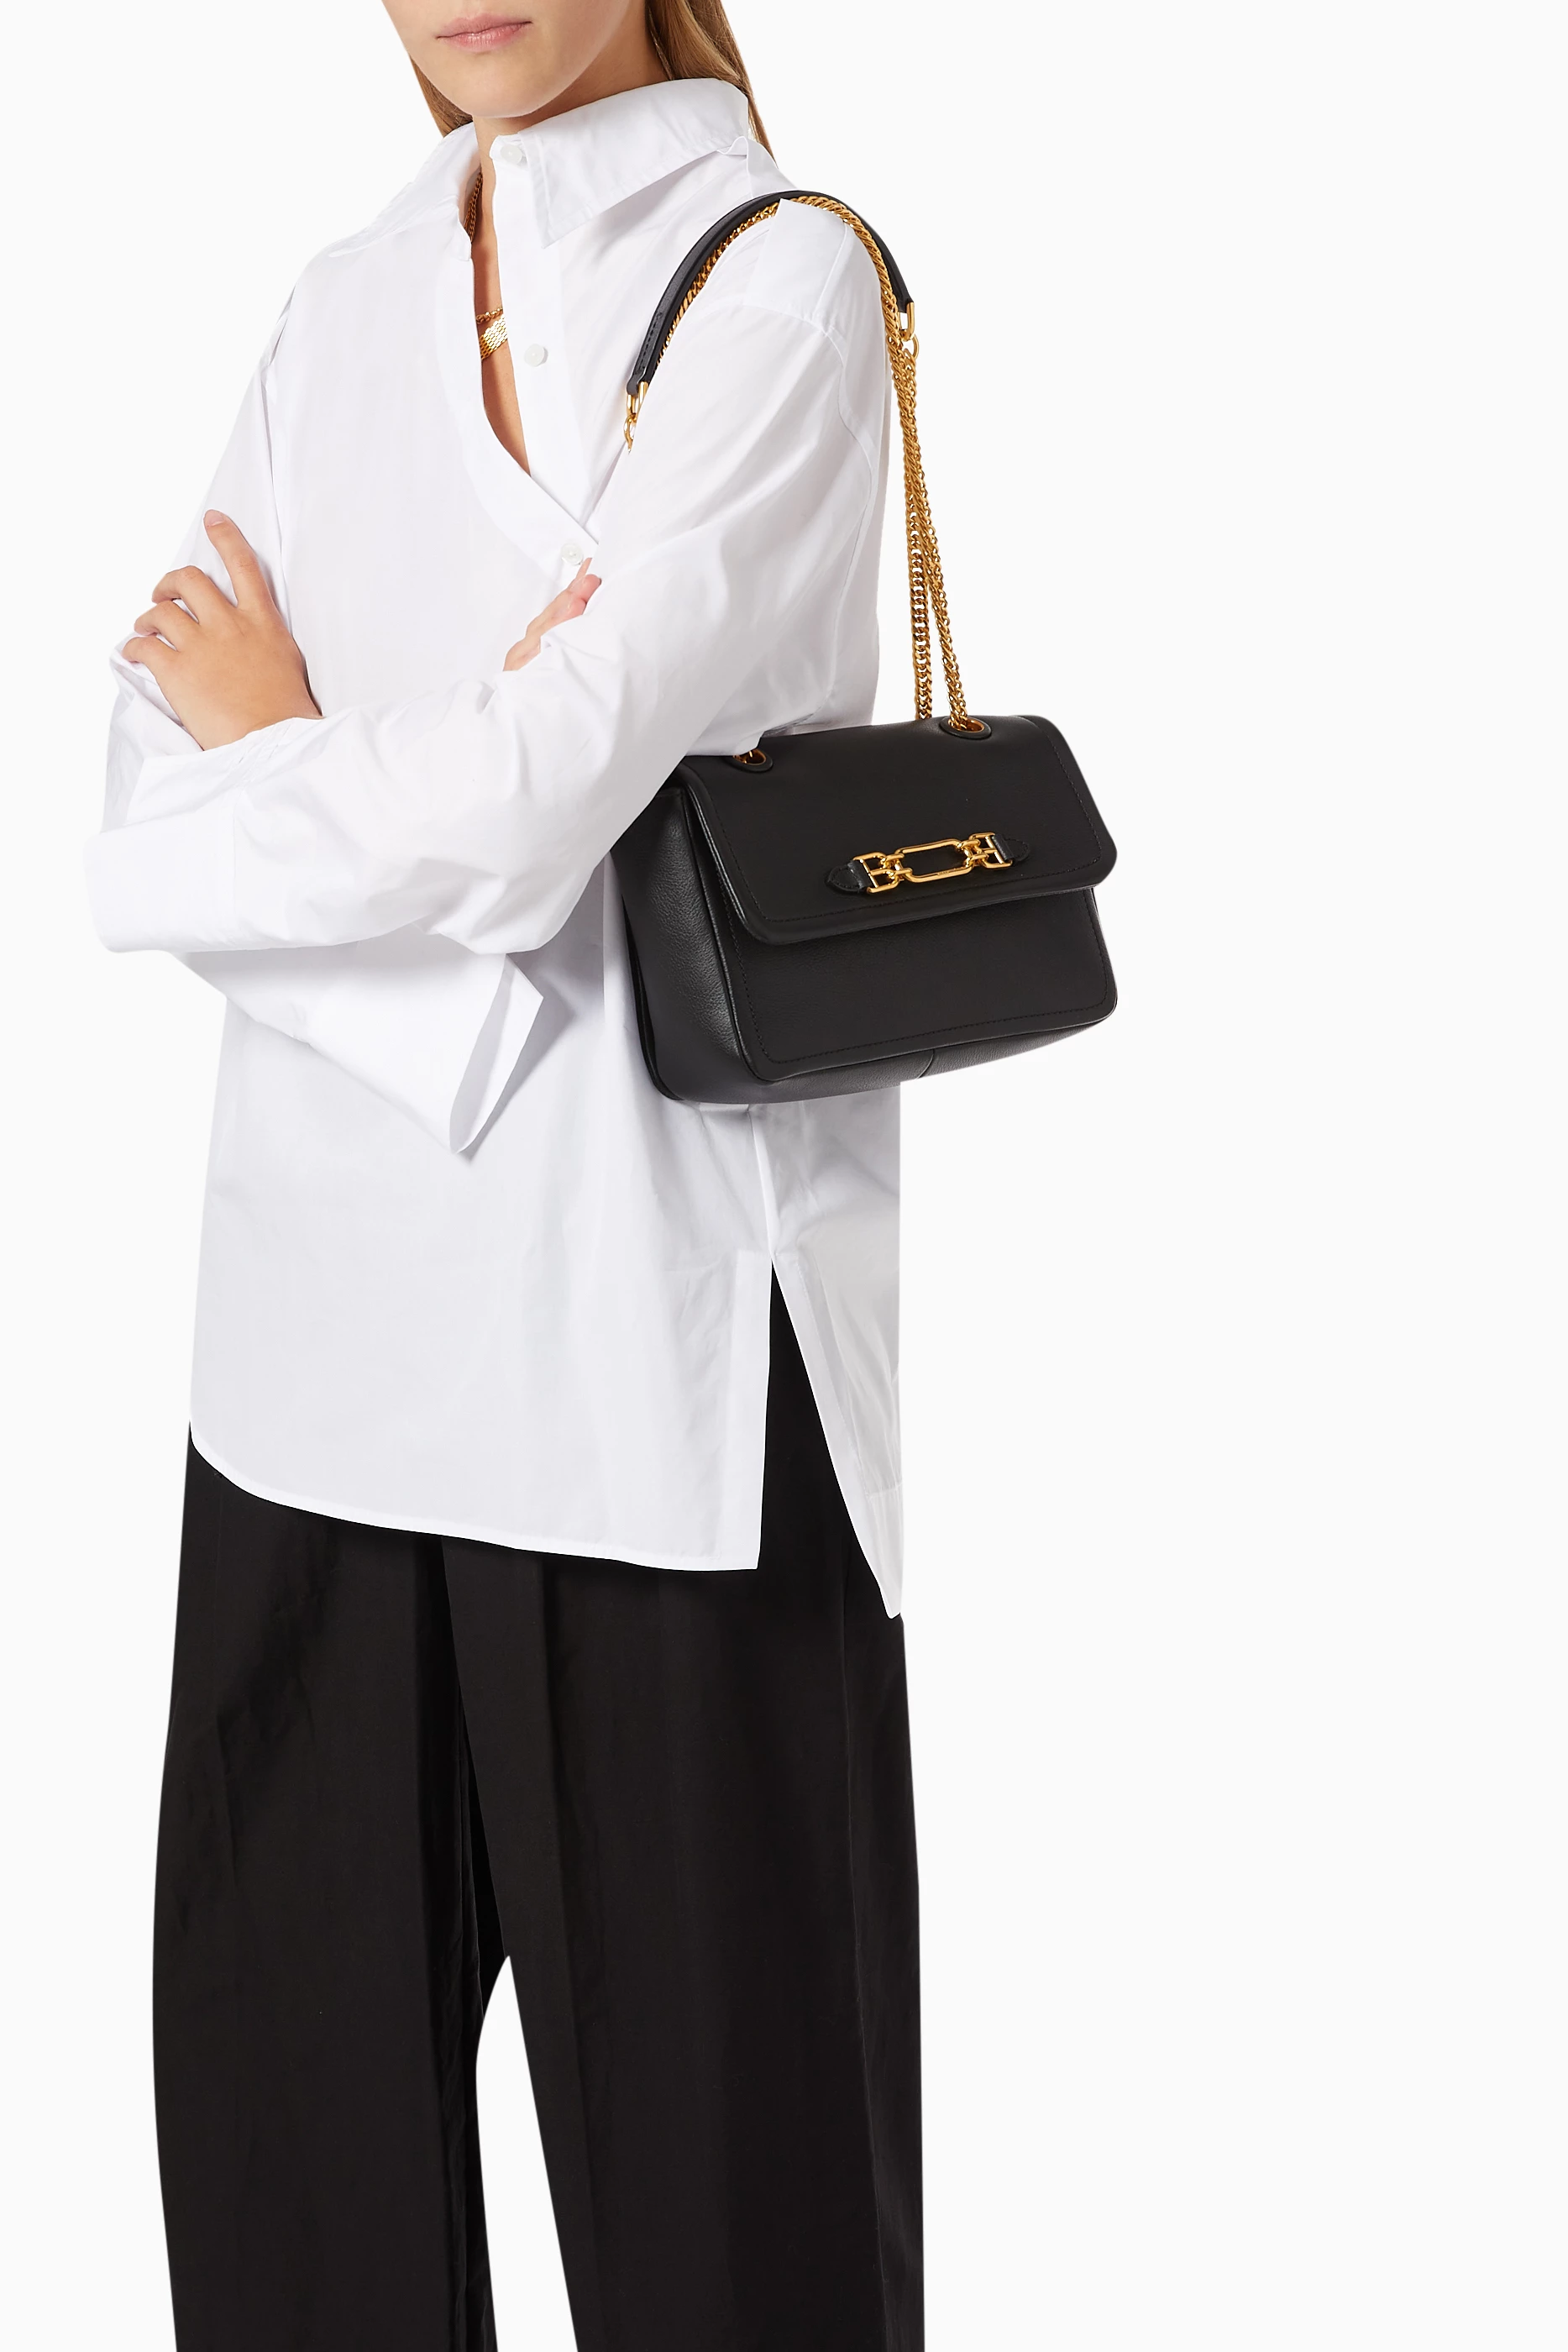 Cross-body Bags  Viva Small - Leather Cross-Body Bag In Black - Bally  Womens - Dramponga